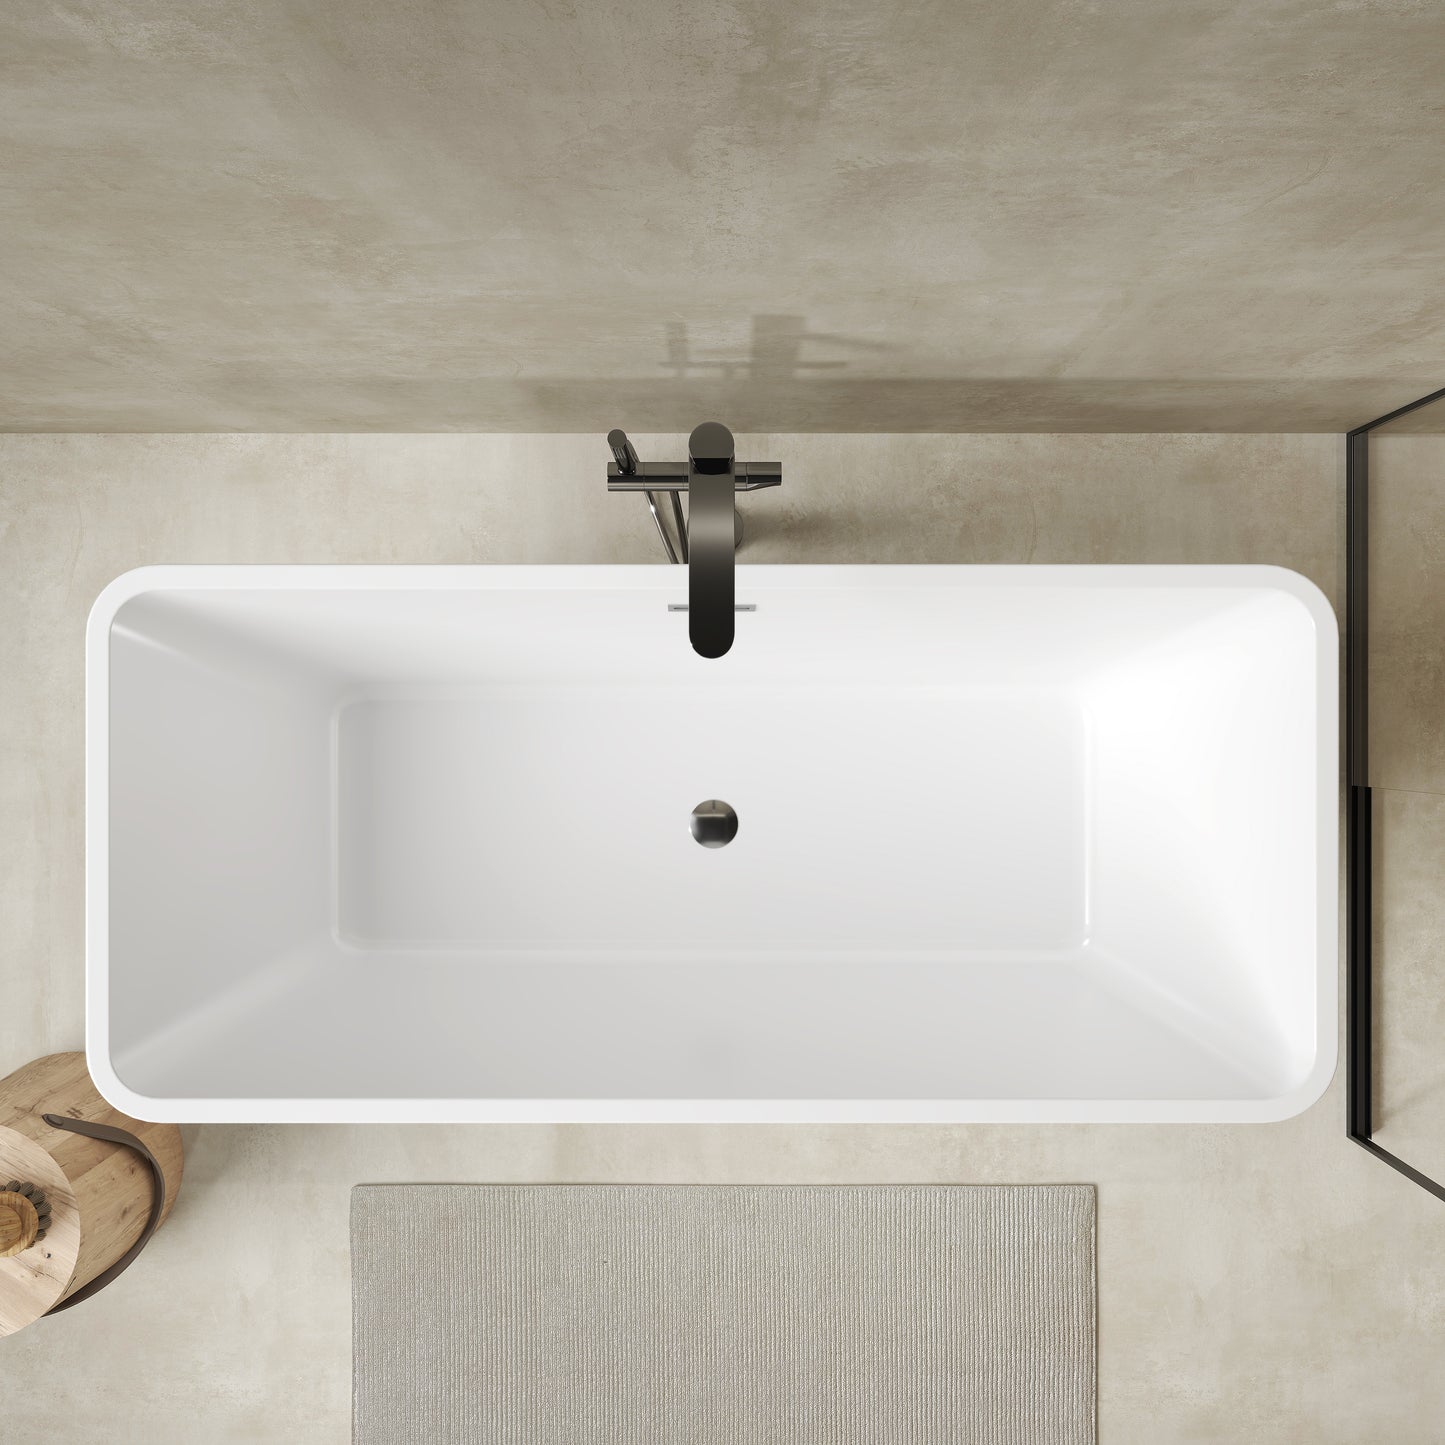 BAUHAUS Cubic Freestanding Bath Tub - White - 1680 x 750 x 580mm